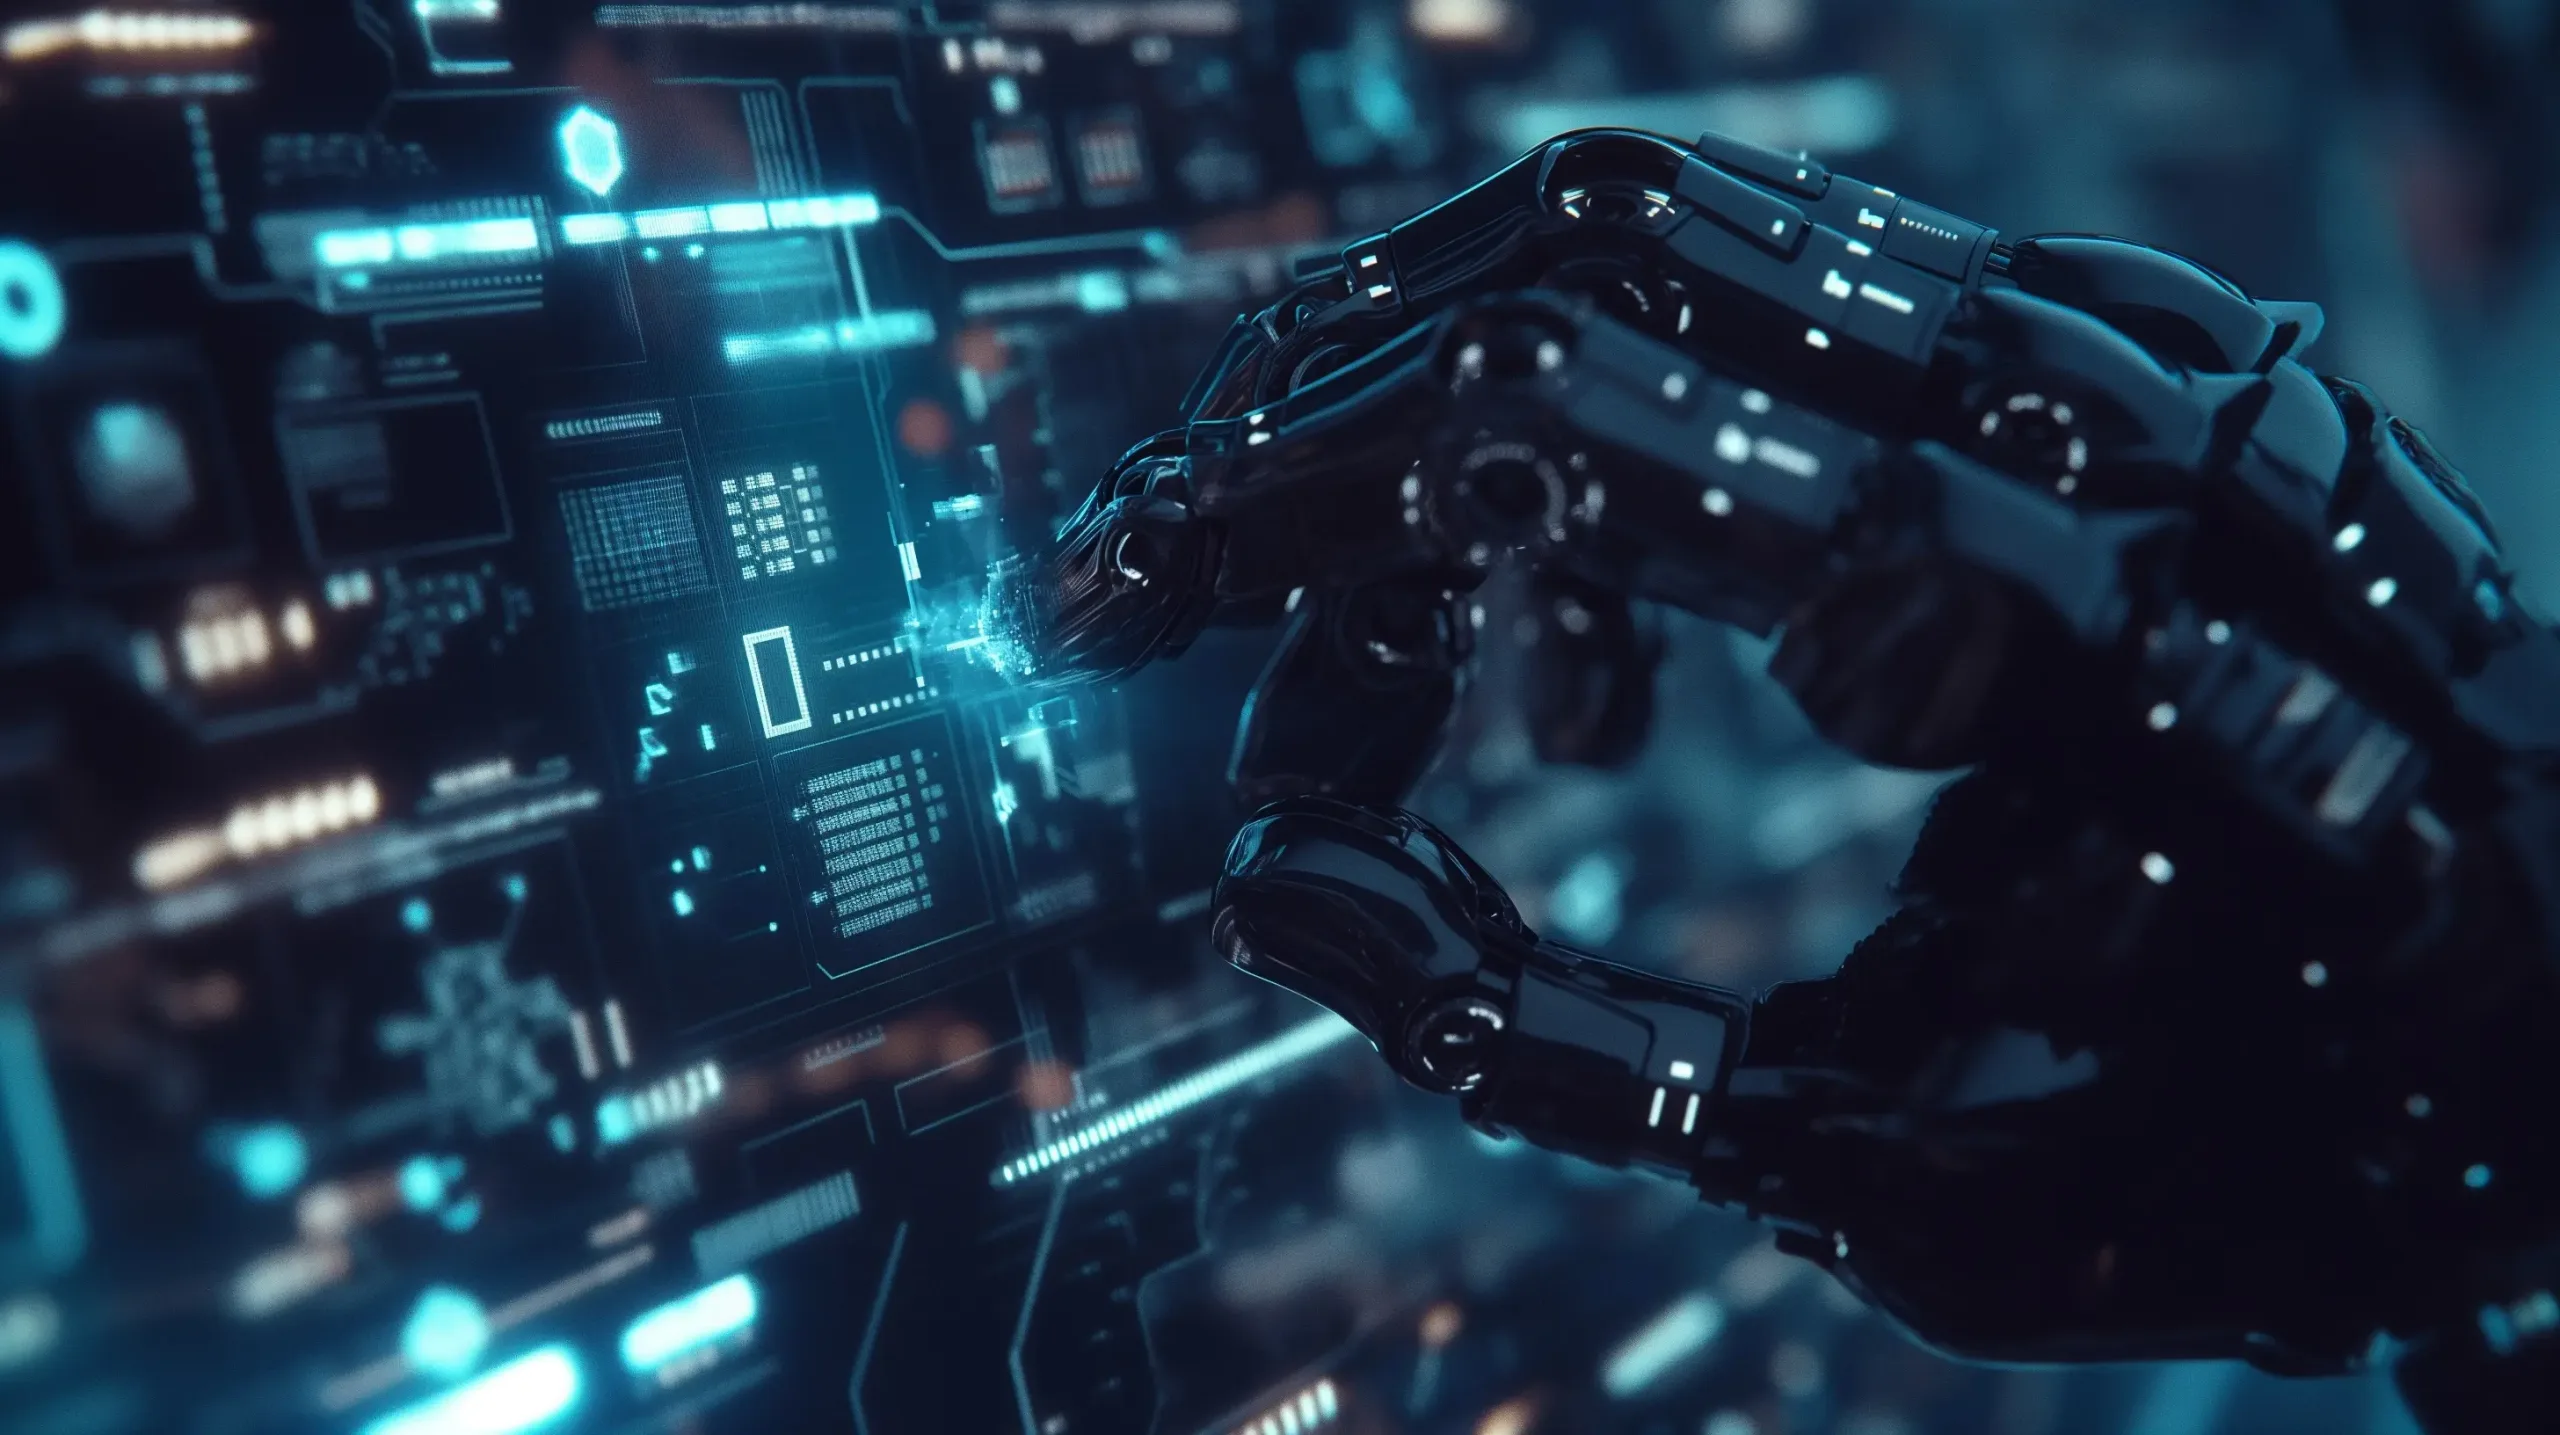 Black robotic hand operates a futuristic panel